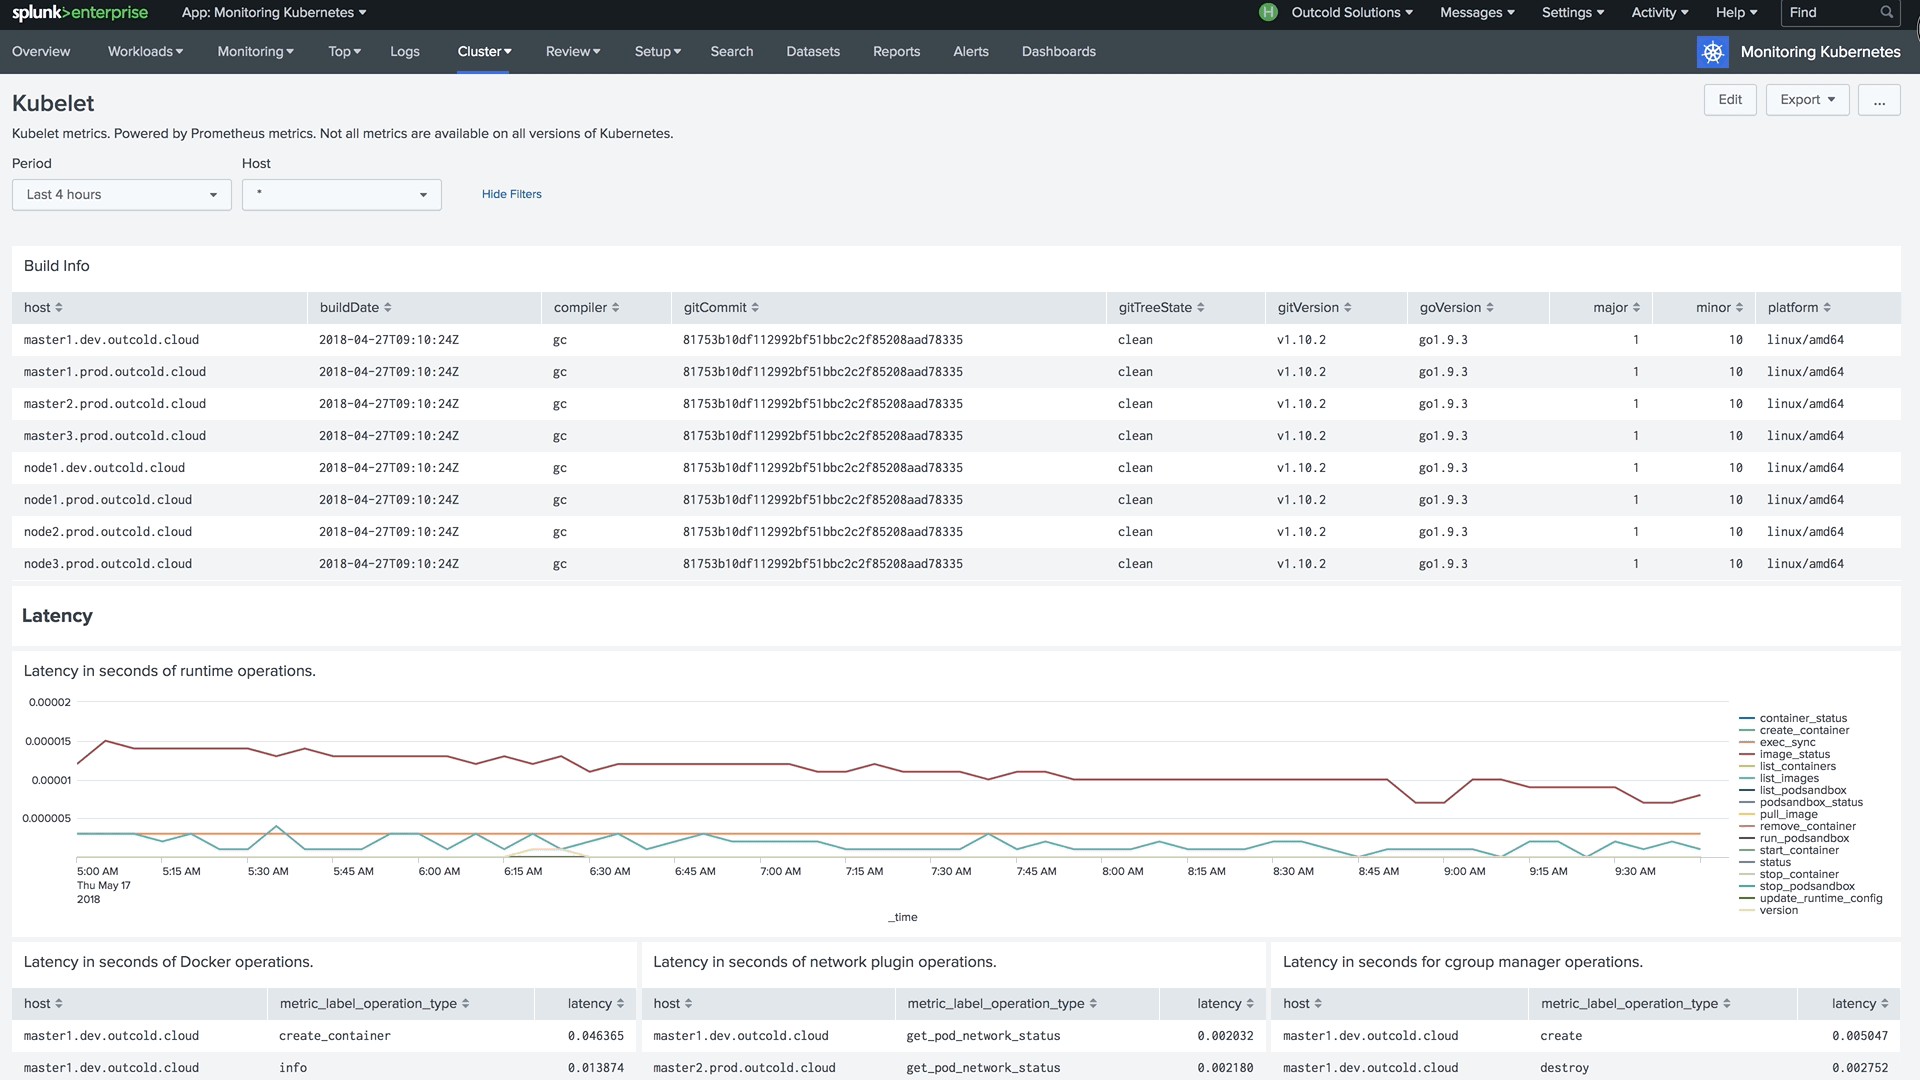 etcd cluster monitoring in Splunk